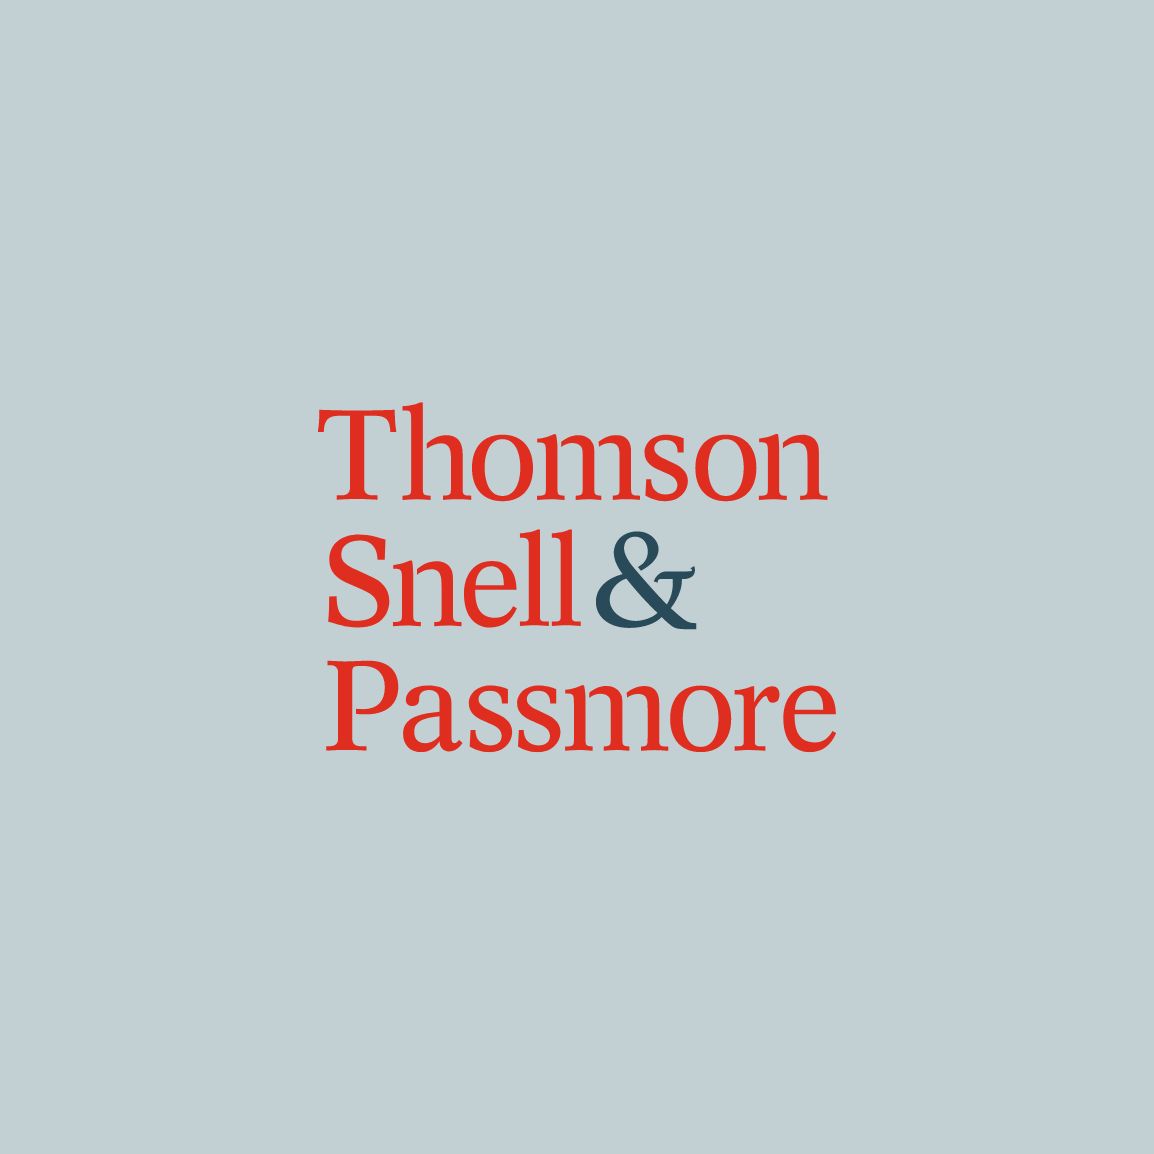 ThomsonSnell&Passmore solicitors in London, branding, website design, website development, website build, hosting by Bluestone98.